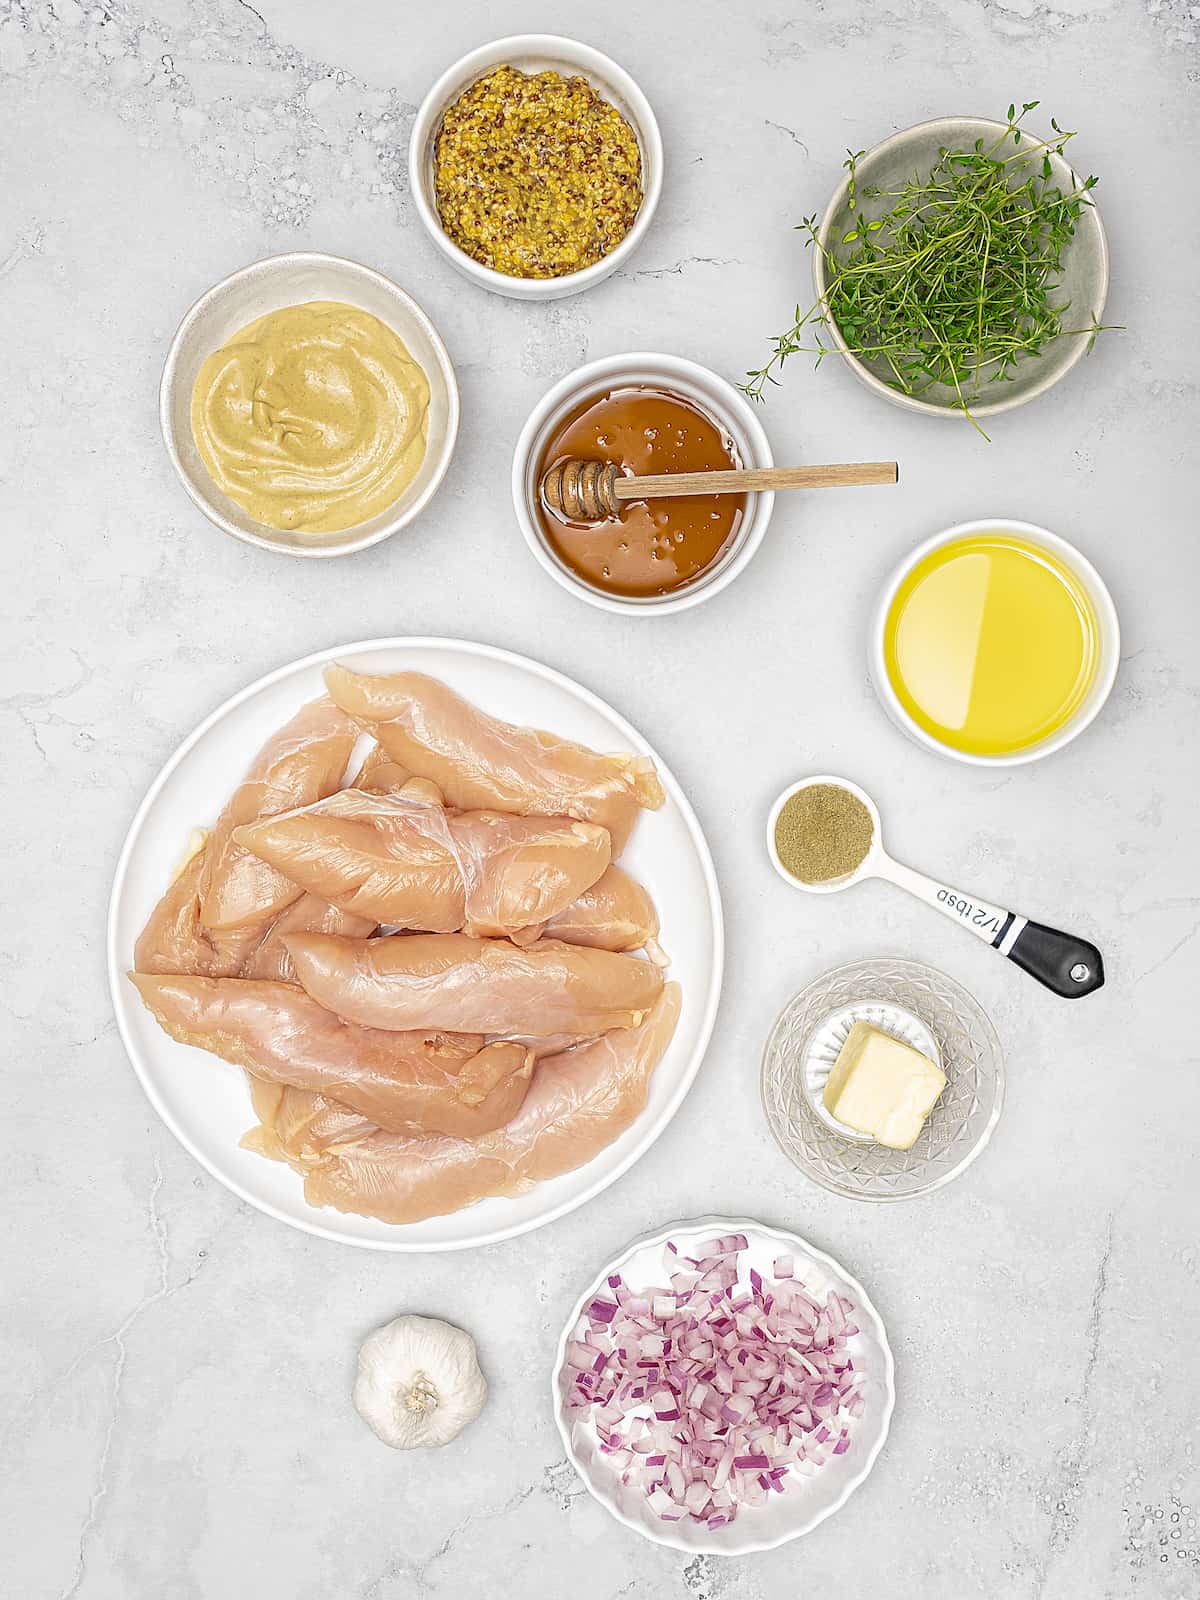 Overhead view of ingredients for honey mustard chicken